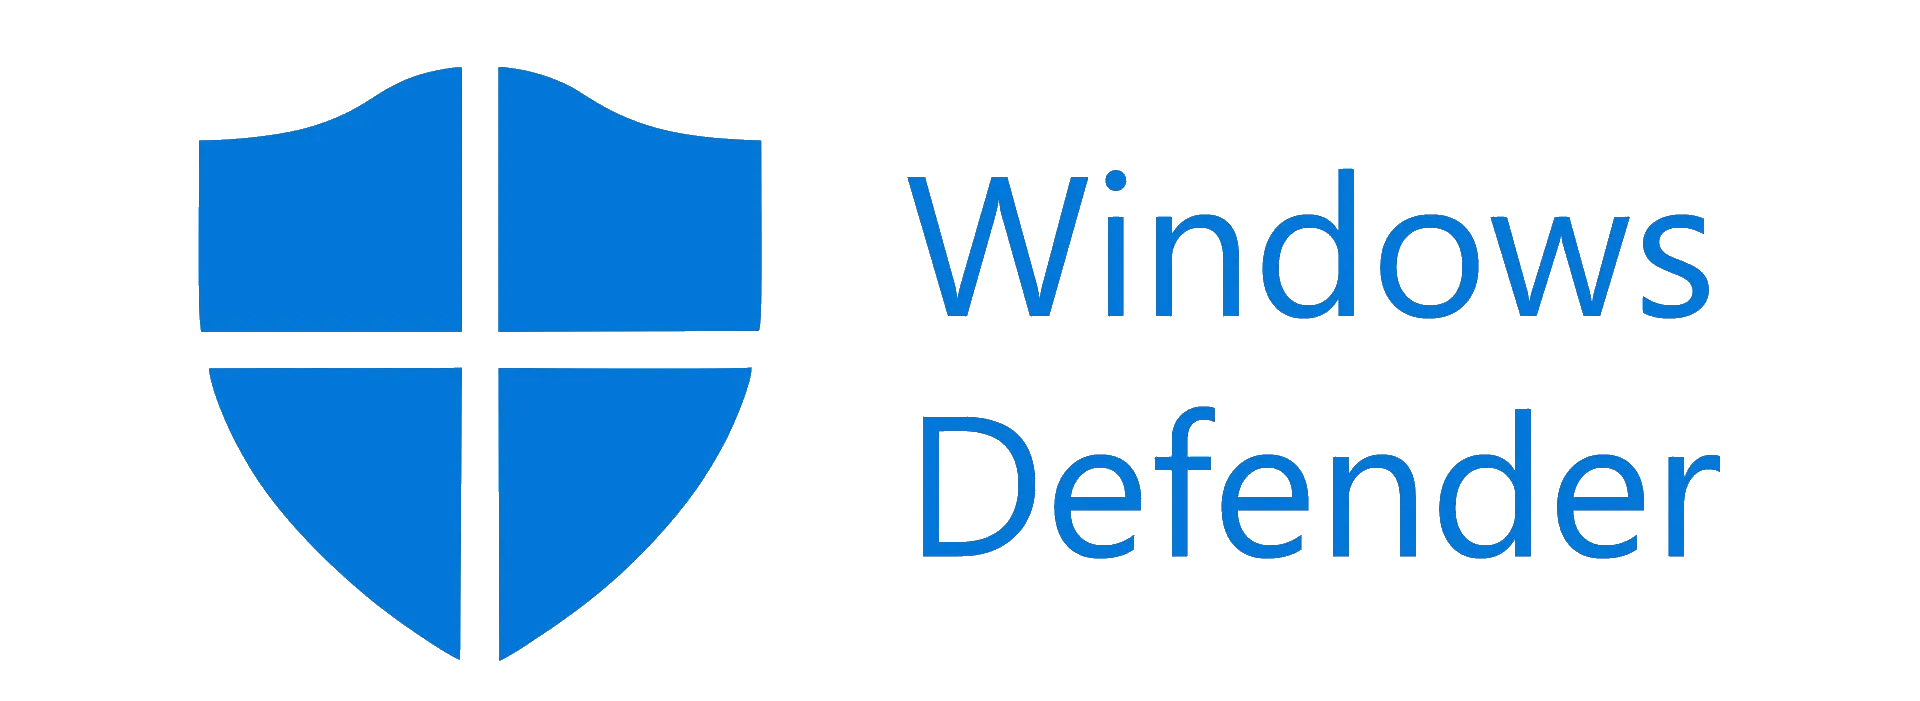 Windows Defender Logo